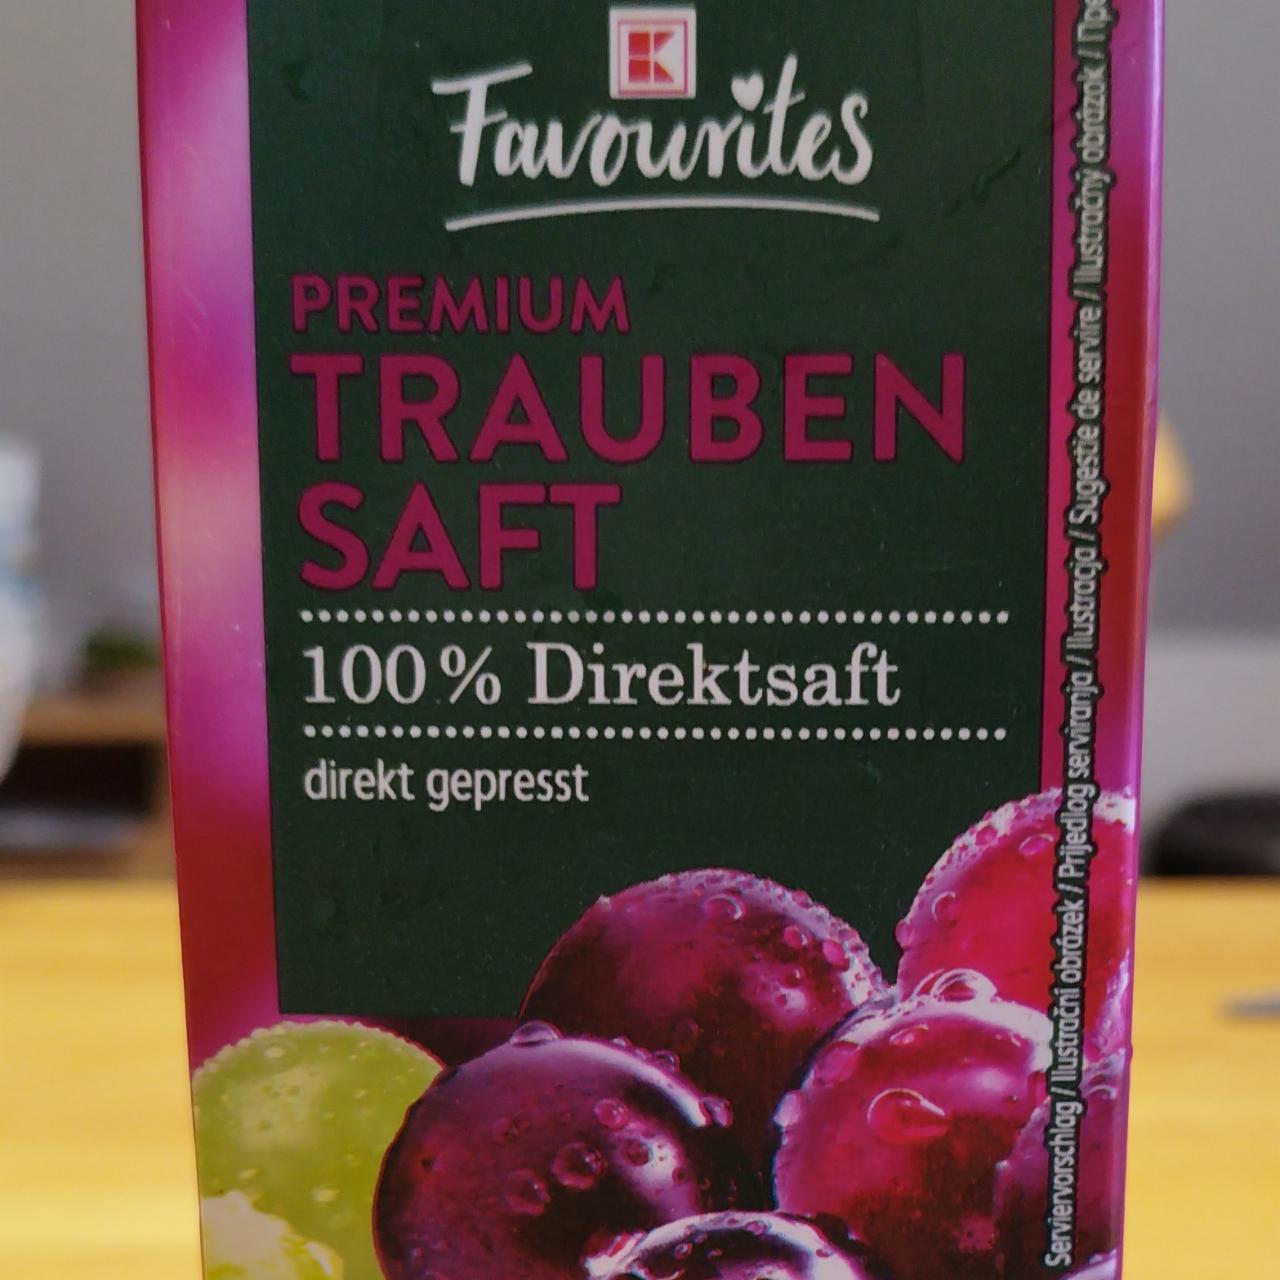 Fotografie - Premium Trauben saft K-Favourites